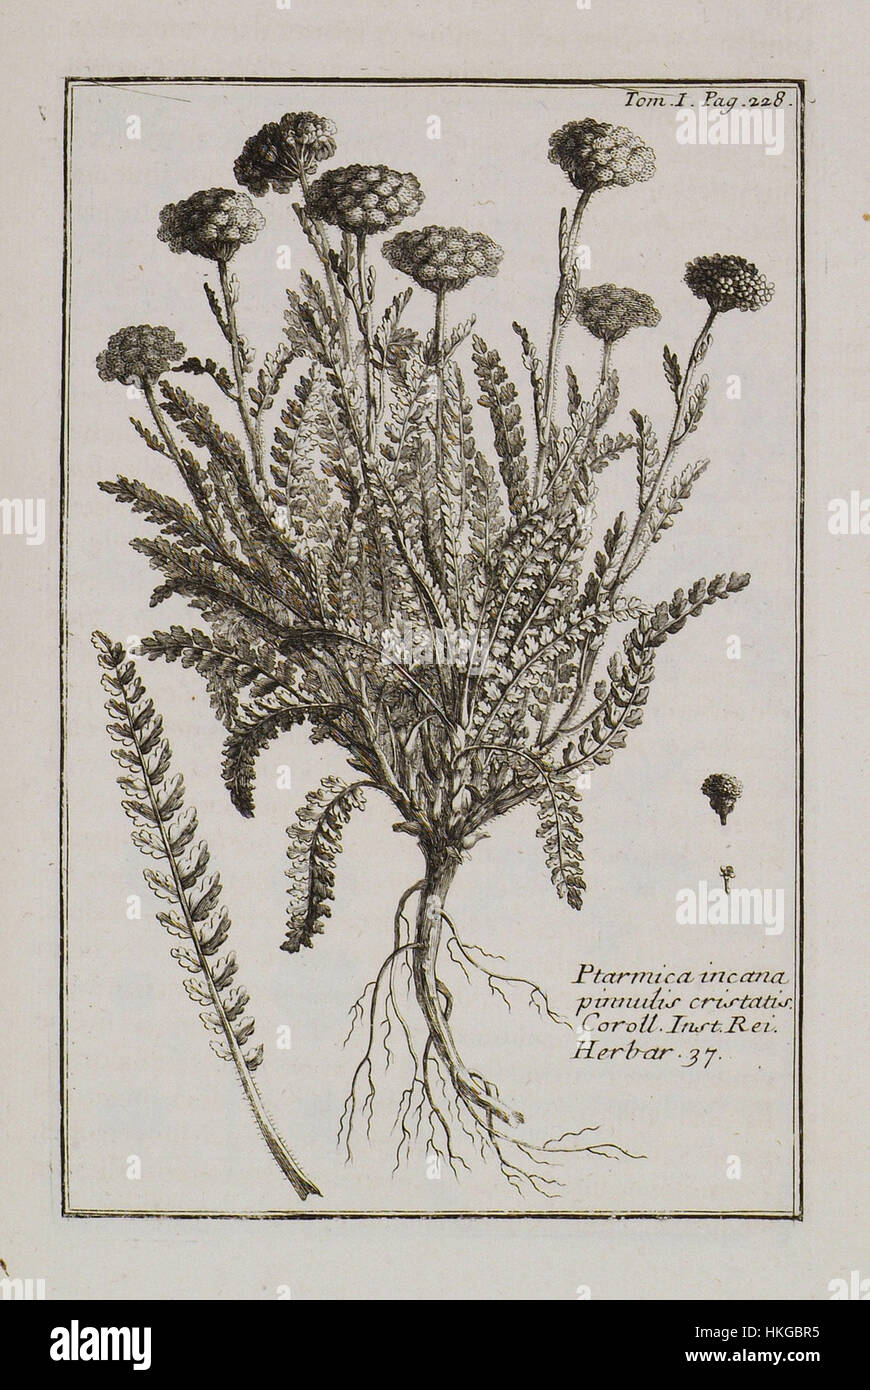 Ptarmica incana, pinnulis cristatis Coroll Inst Rei Herbar 37   Tournefort Joseph Pitton De   1717 Stock Photo